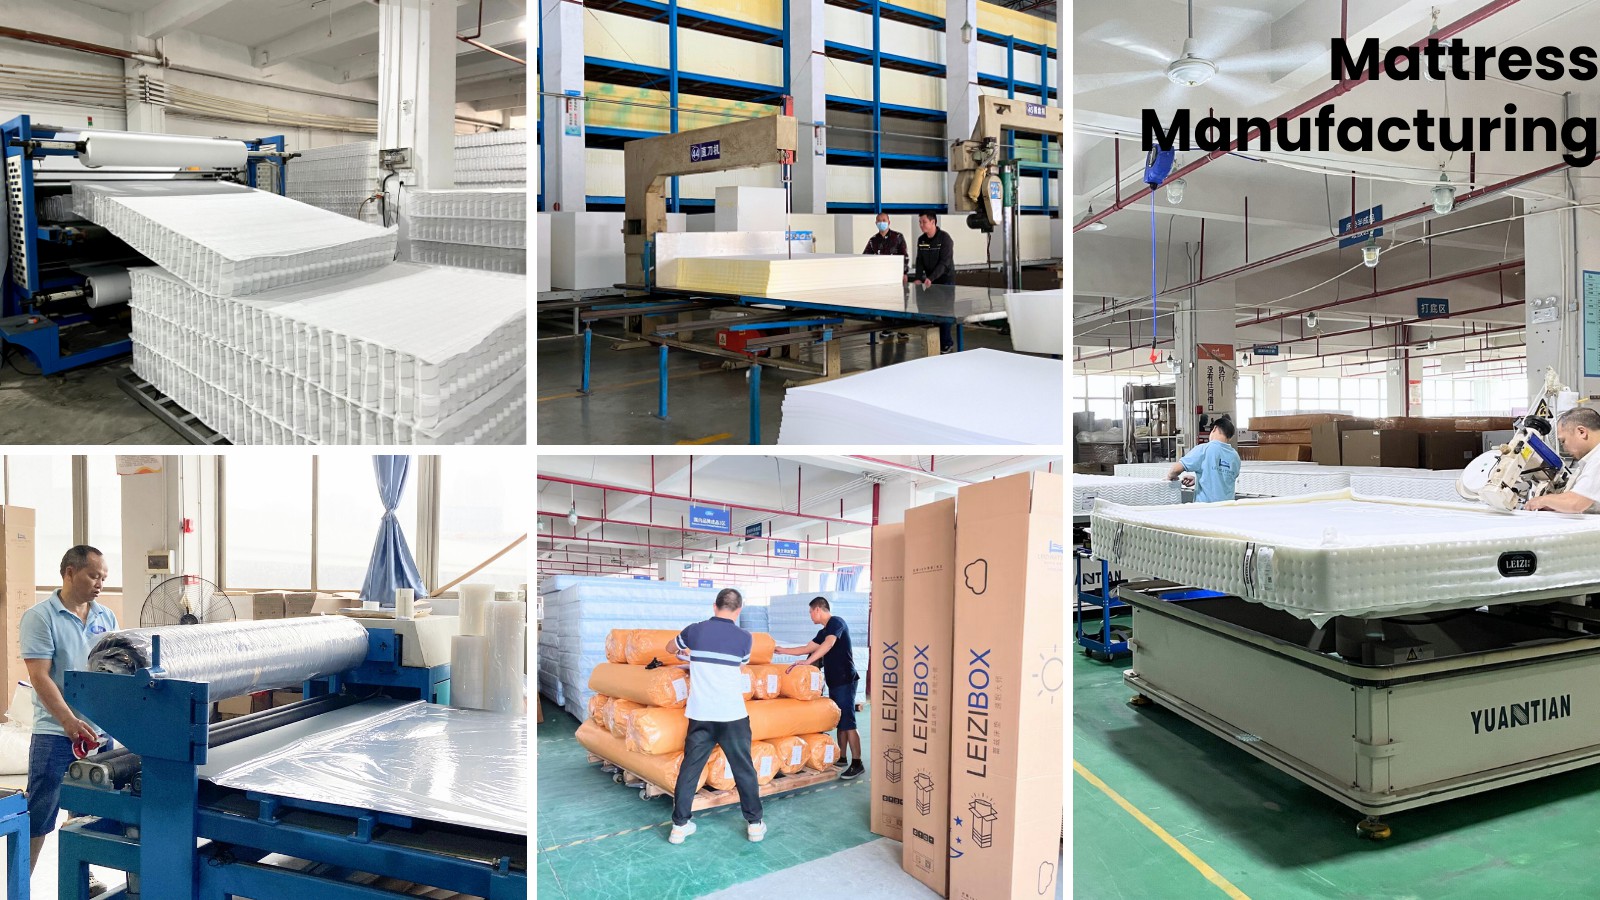 LEIZI mattress production workshop